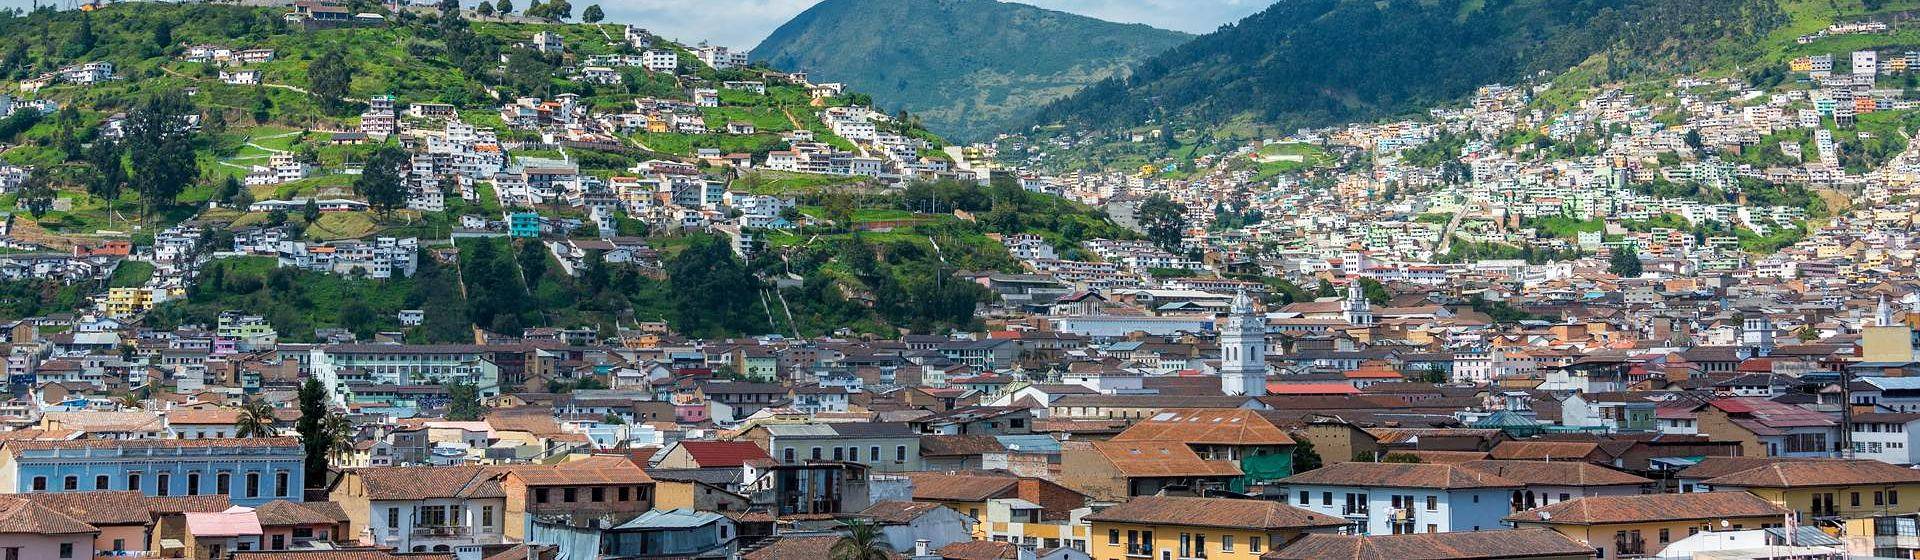 Holidays to Quito Image